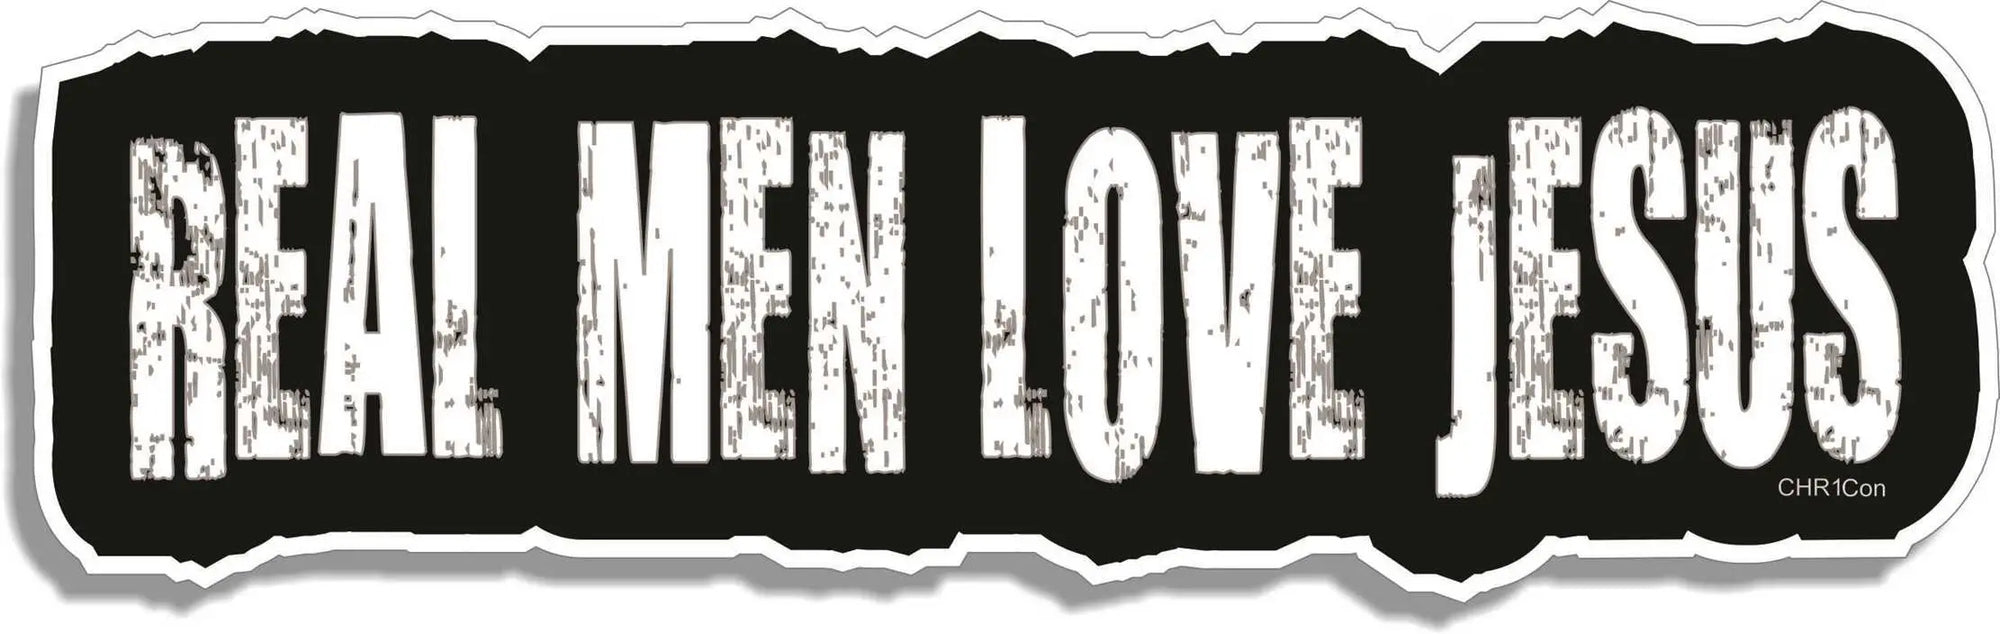 Real Men Love Jesus - Christian Bumper Sticker/Sticker Sets Humper Bumper